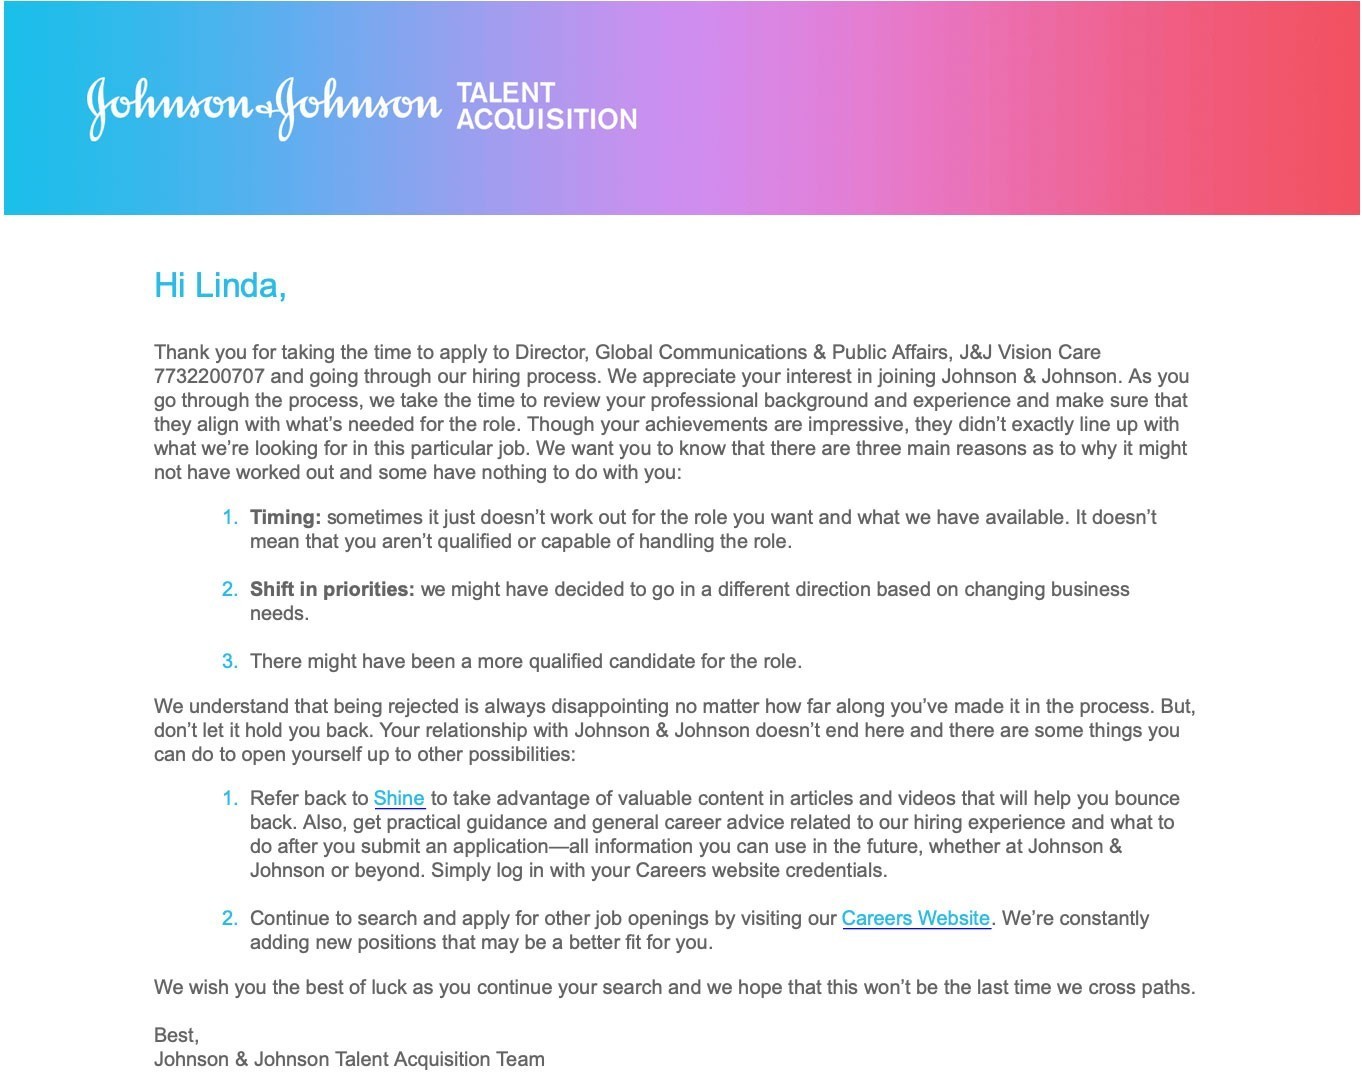 Screenshot of rejection letter from Johnson & Johnson